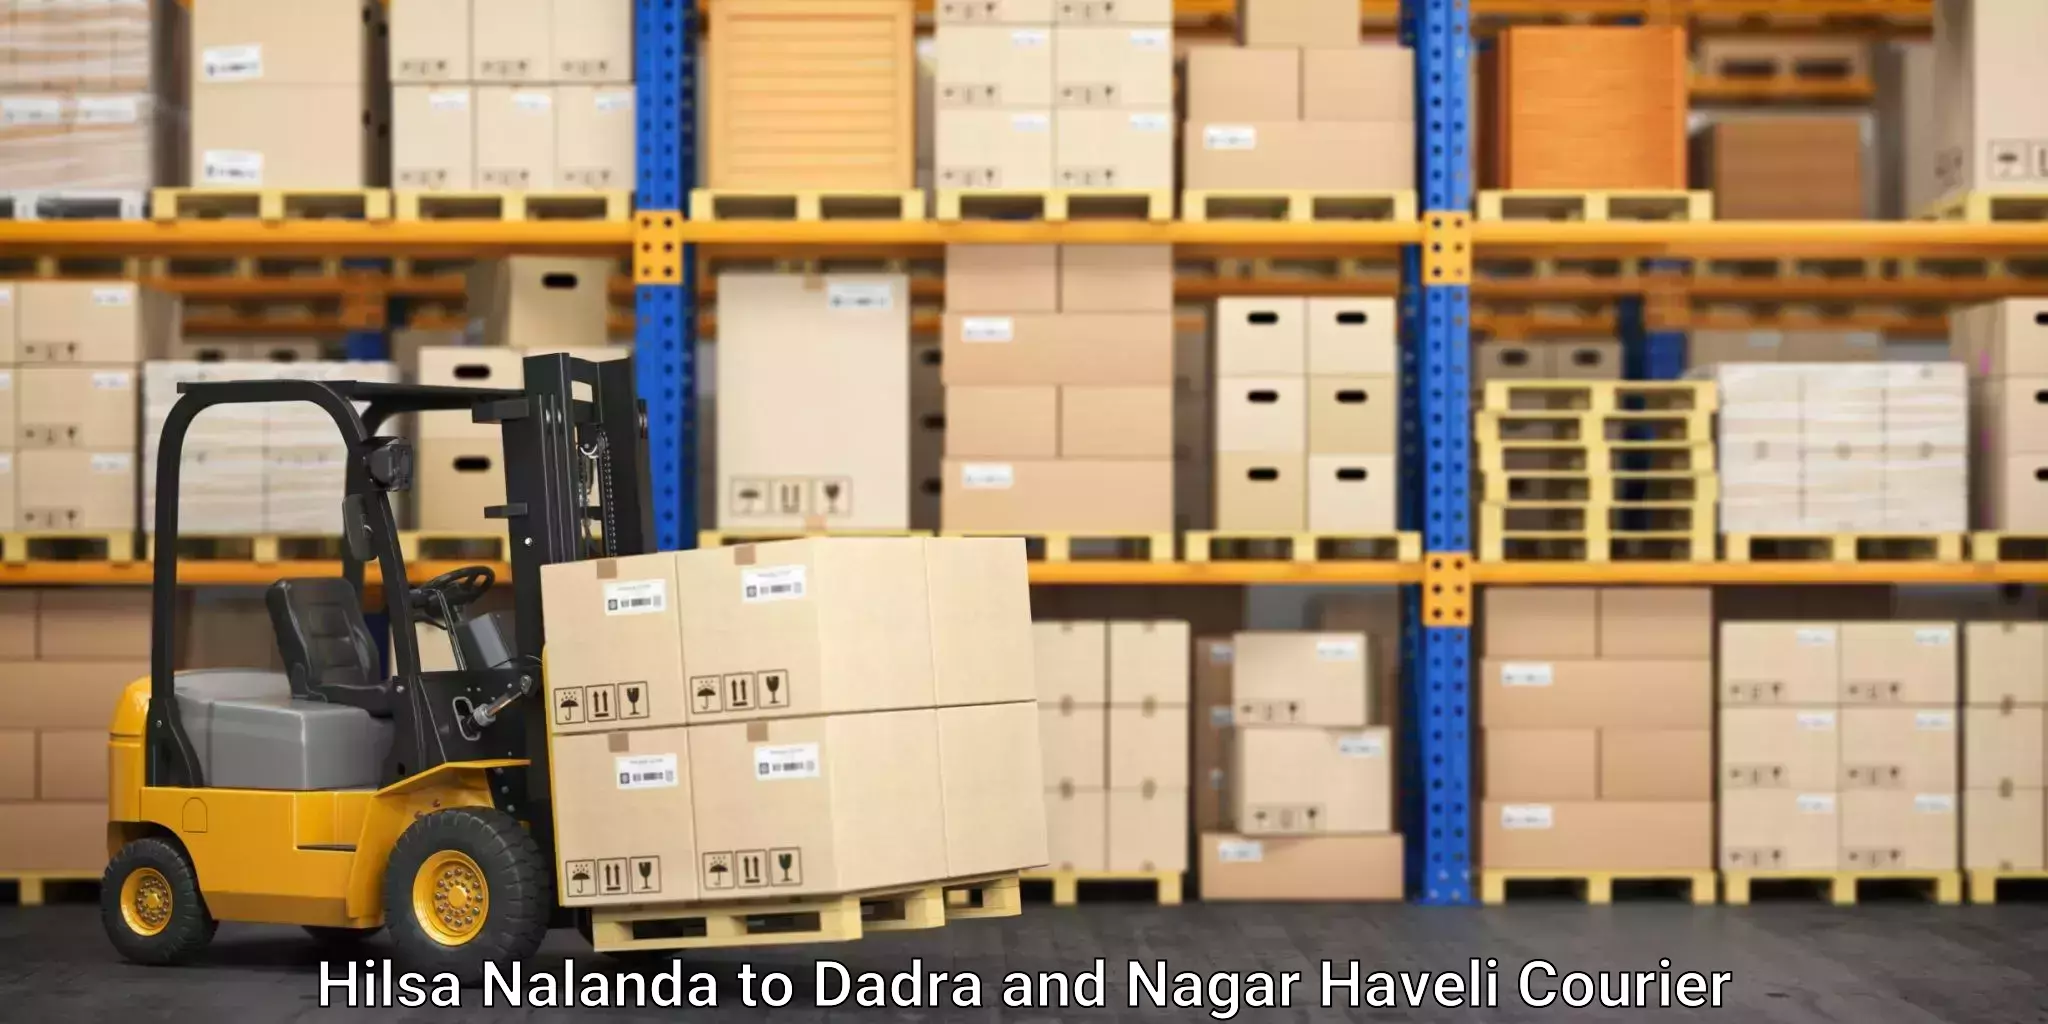 Furniture moving solutions in Hilsa Nalanda to Dadra and Nagar Haveli